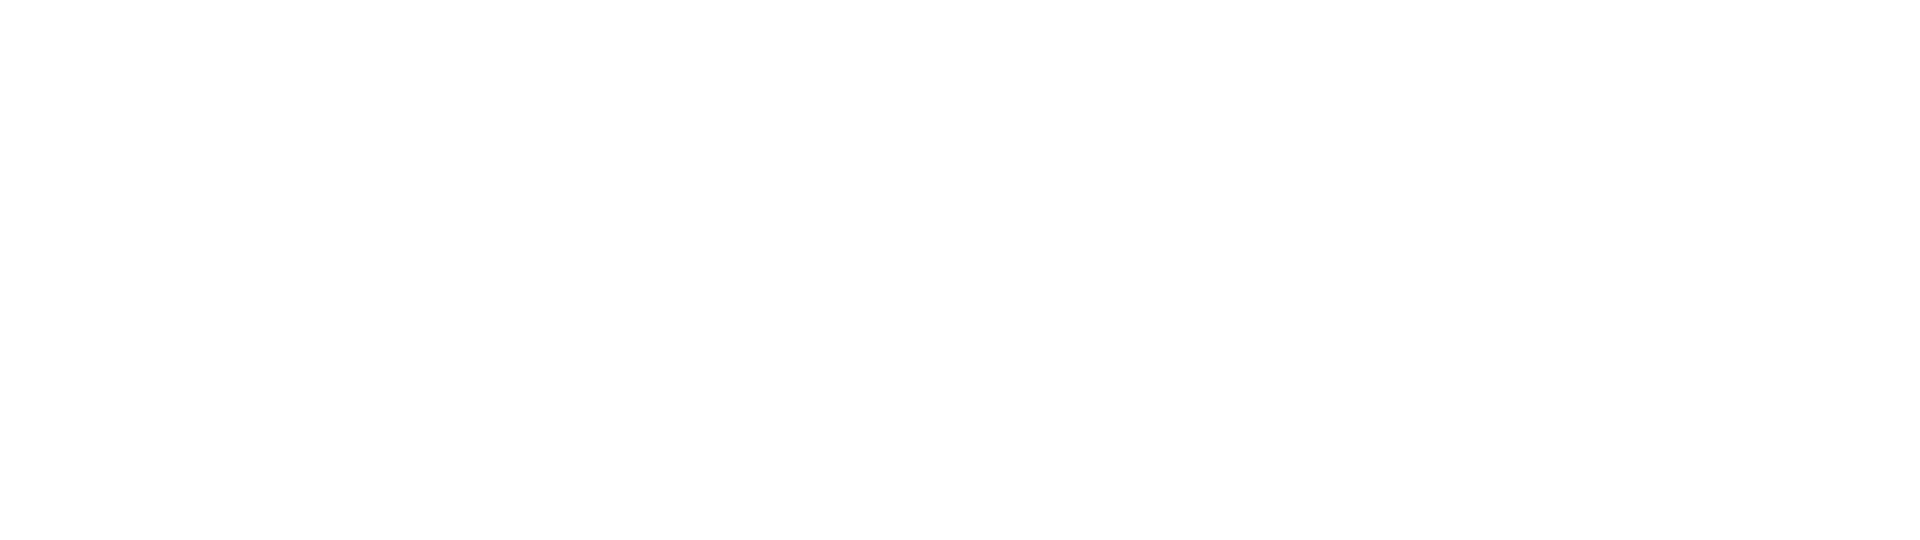 formula for breakthroughs